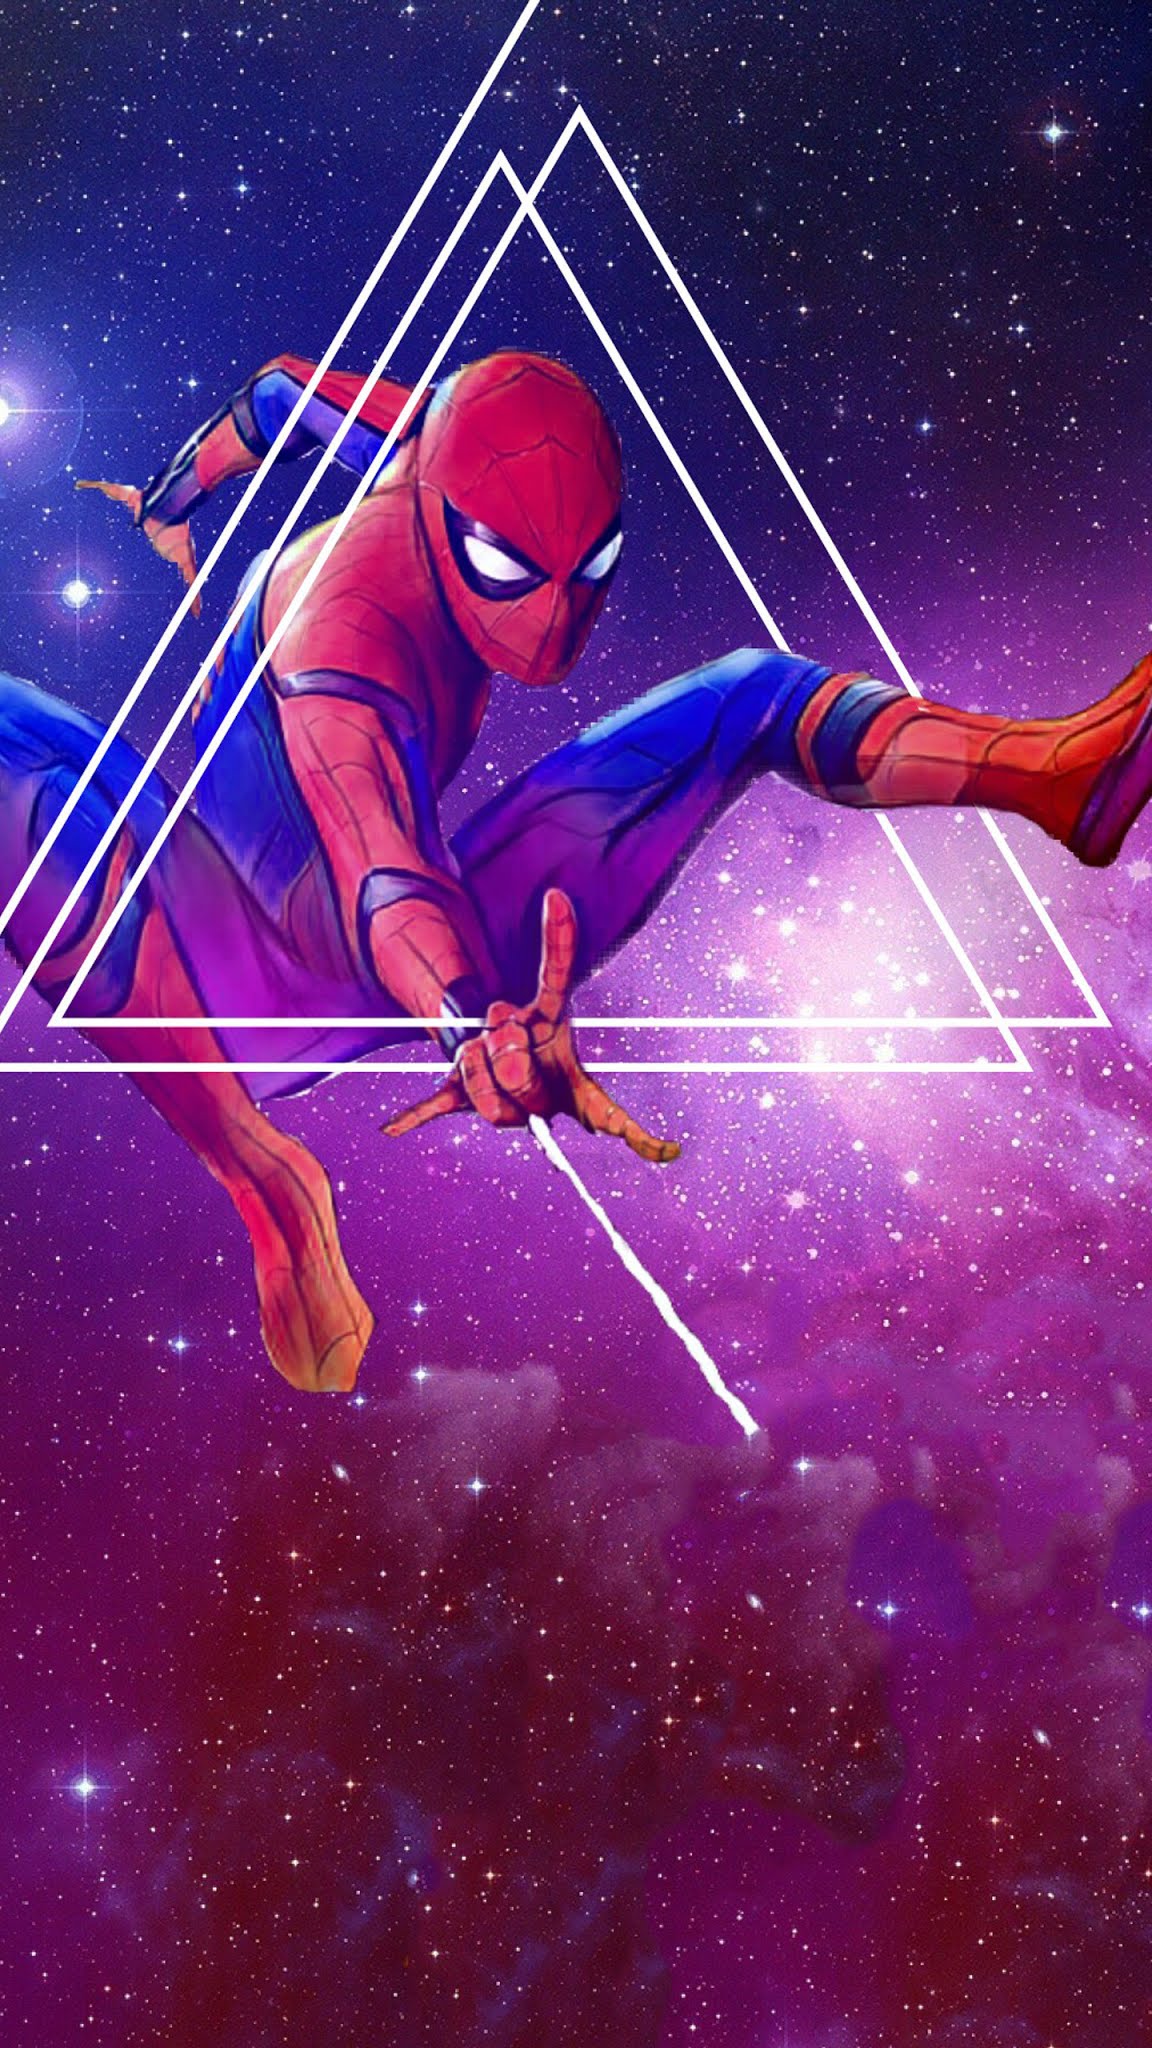 Spiderman avengers infinity war artwork mobile wallpaper Mobile Walls